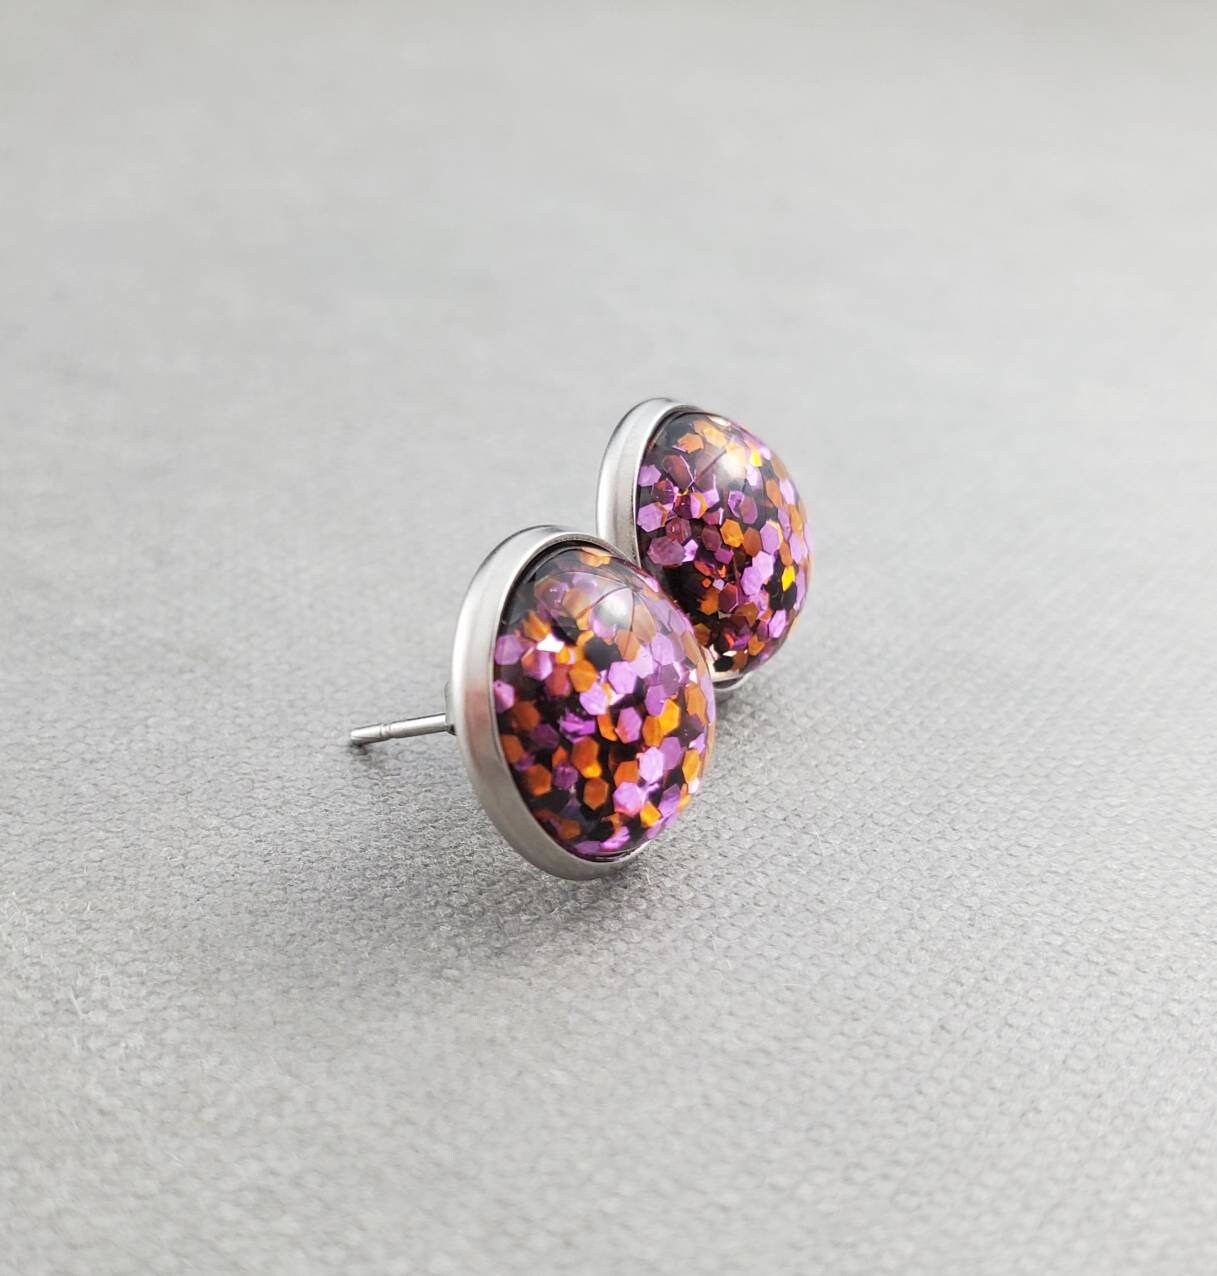 Rainbow Glitter Stud Earrings, Silver Stainless Steel Post Earrings, Hypoallergenic Jewelry for Sensitive Ears, Gift for Teenage Tween Girl